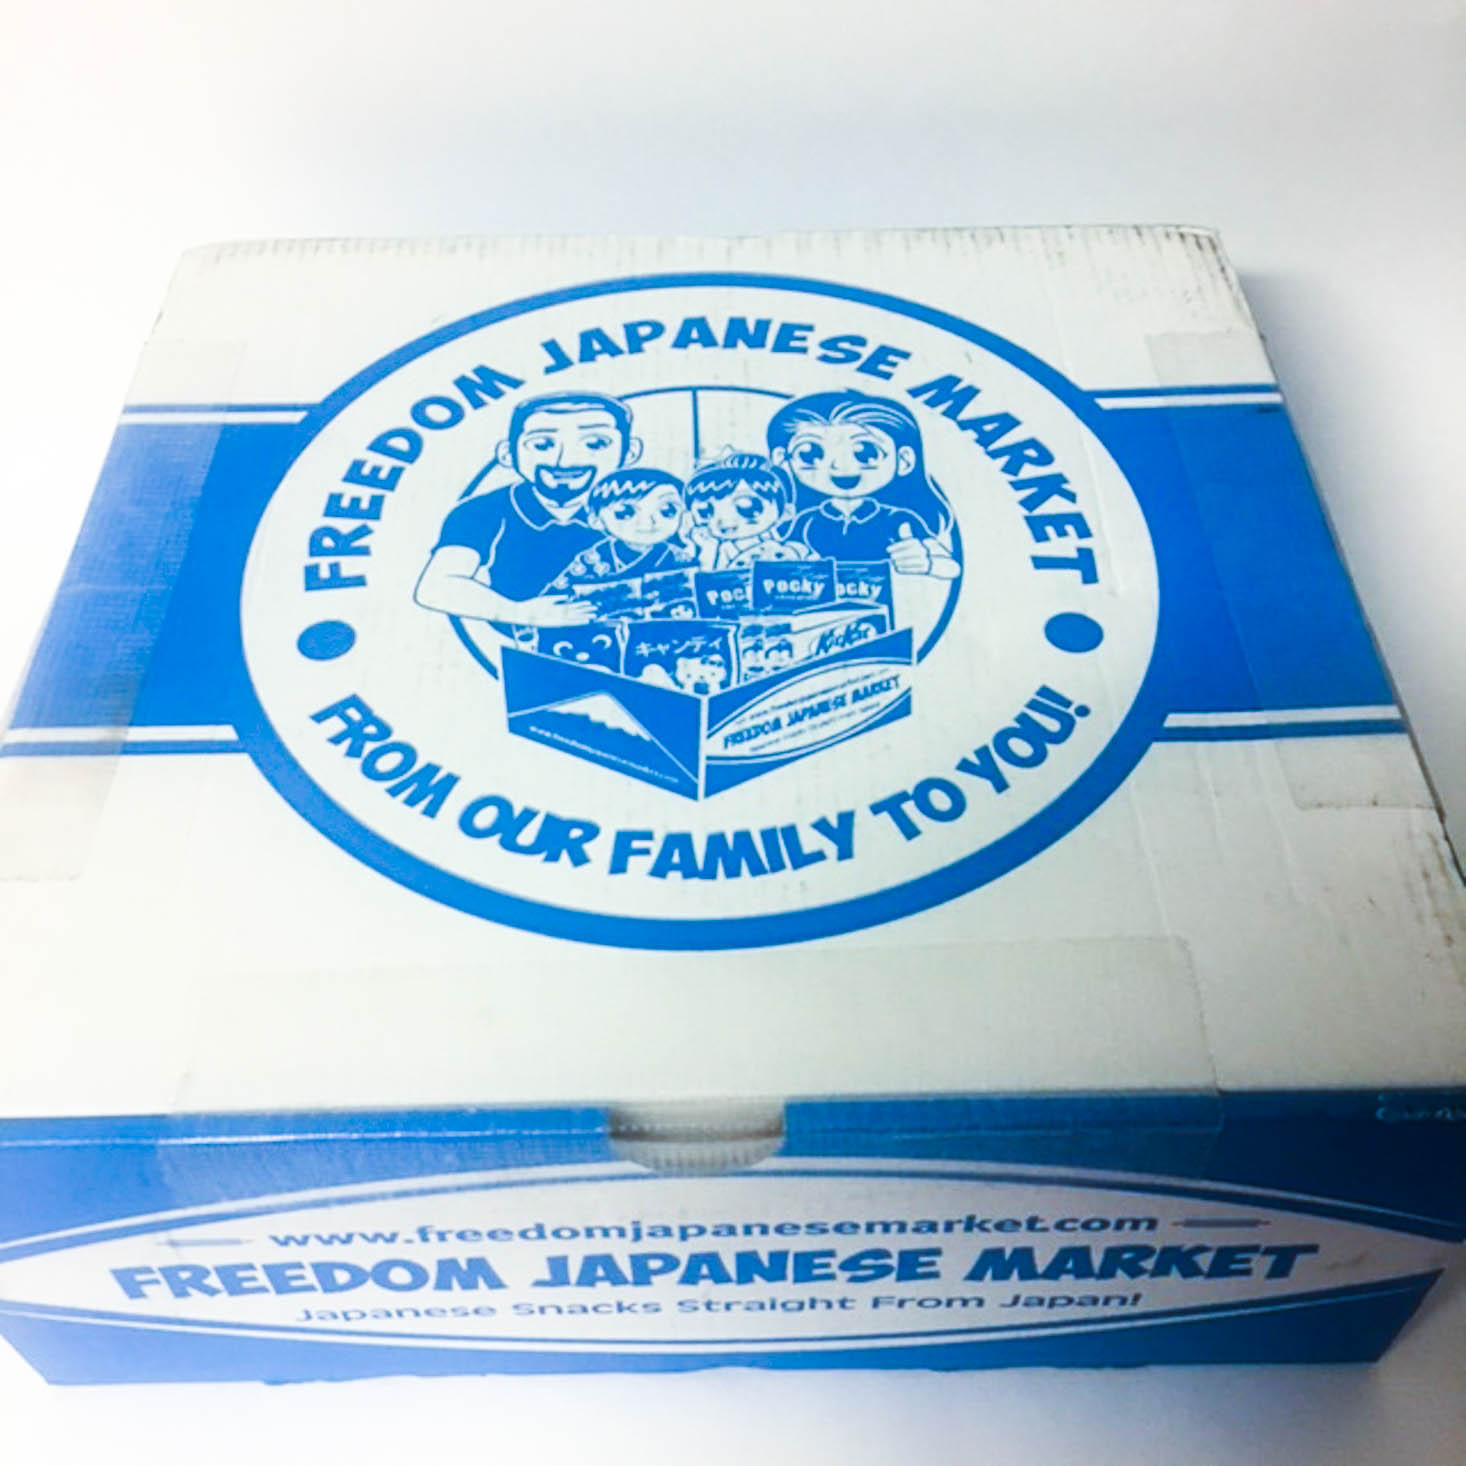 Freedom Japanese Market Snacks Box Review + Coupon – September 2017